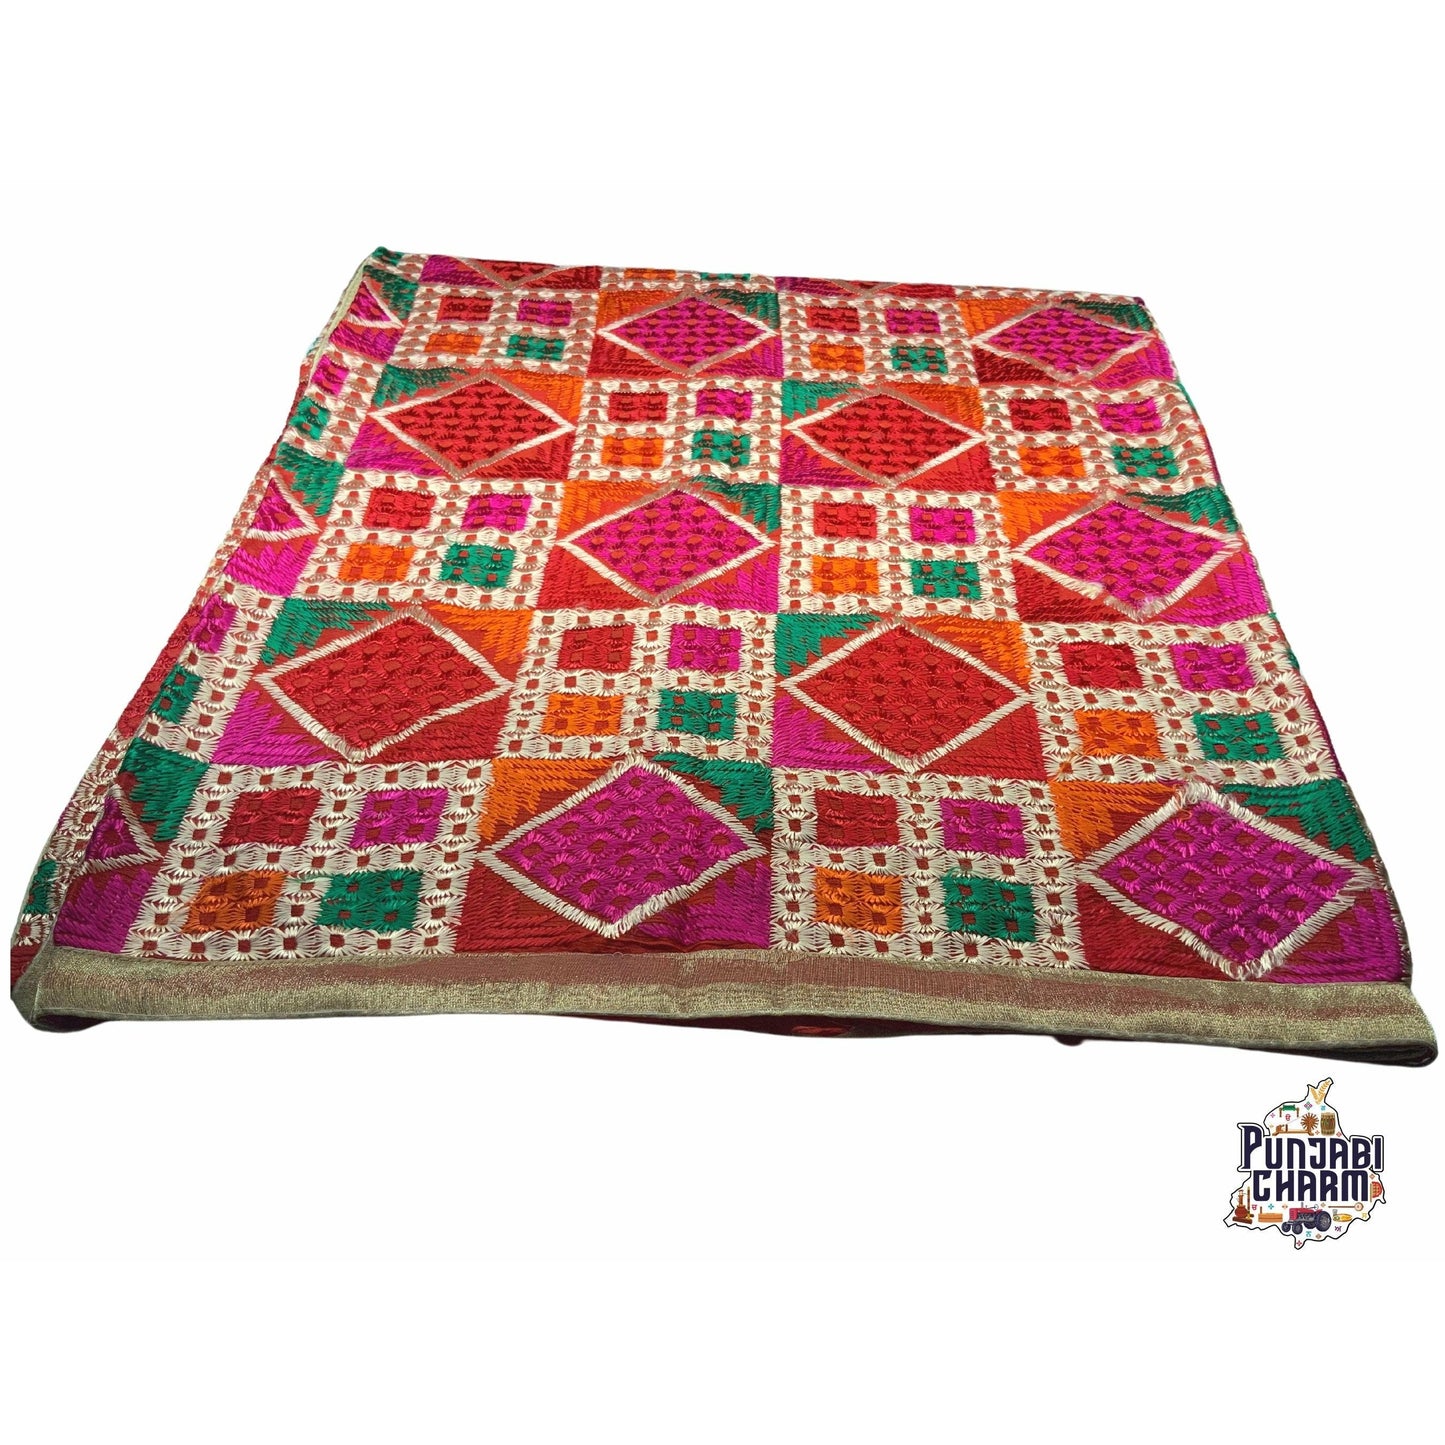 Phulkari / Fulkari Dupatta with beautiful multicolor embroidery work and golden lace on the borders